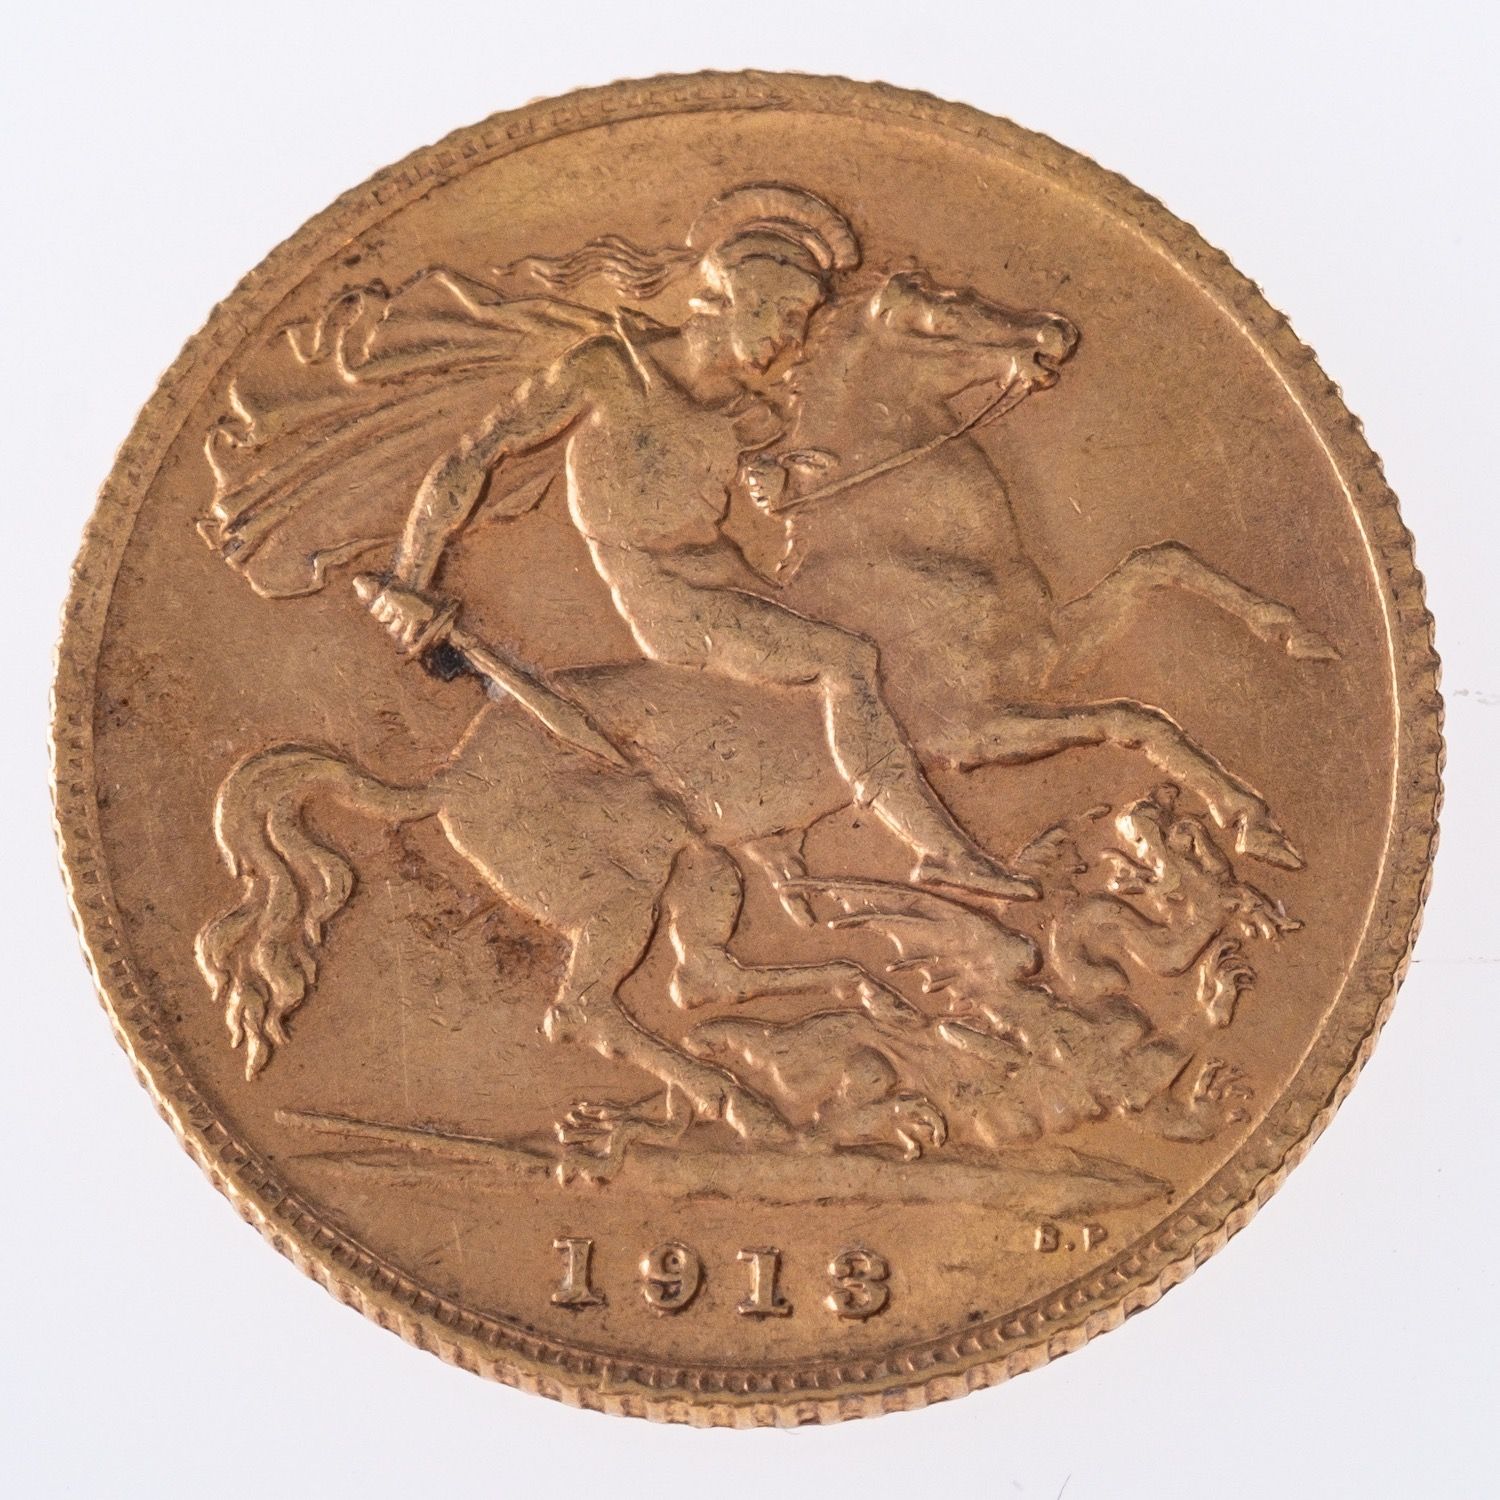 A half sovereign, an unmounted George V 1913 half sovereign, 3.9grams.